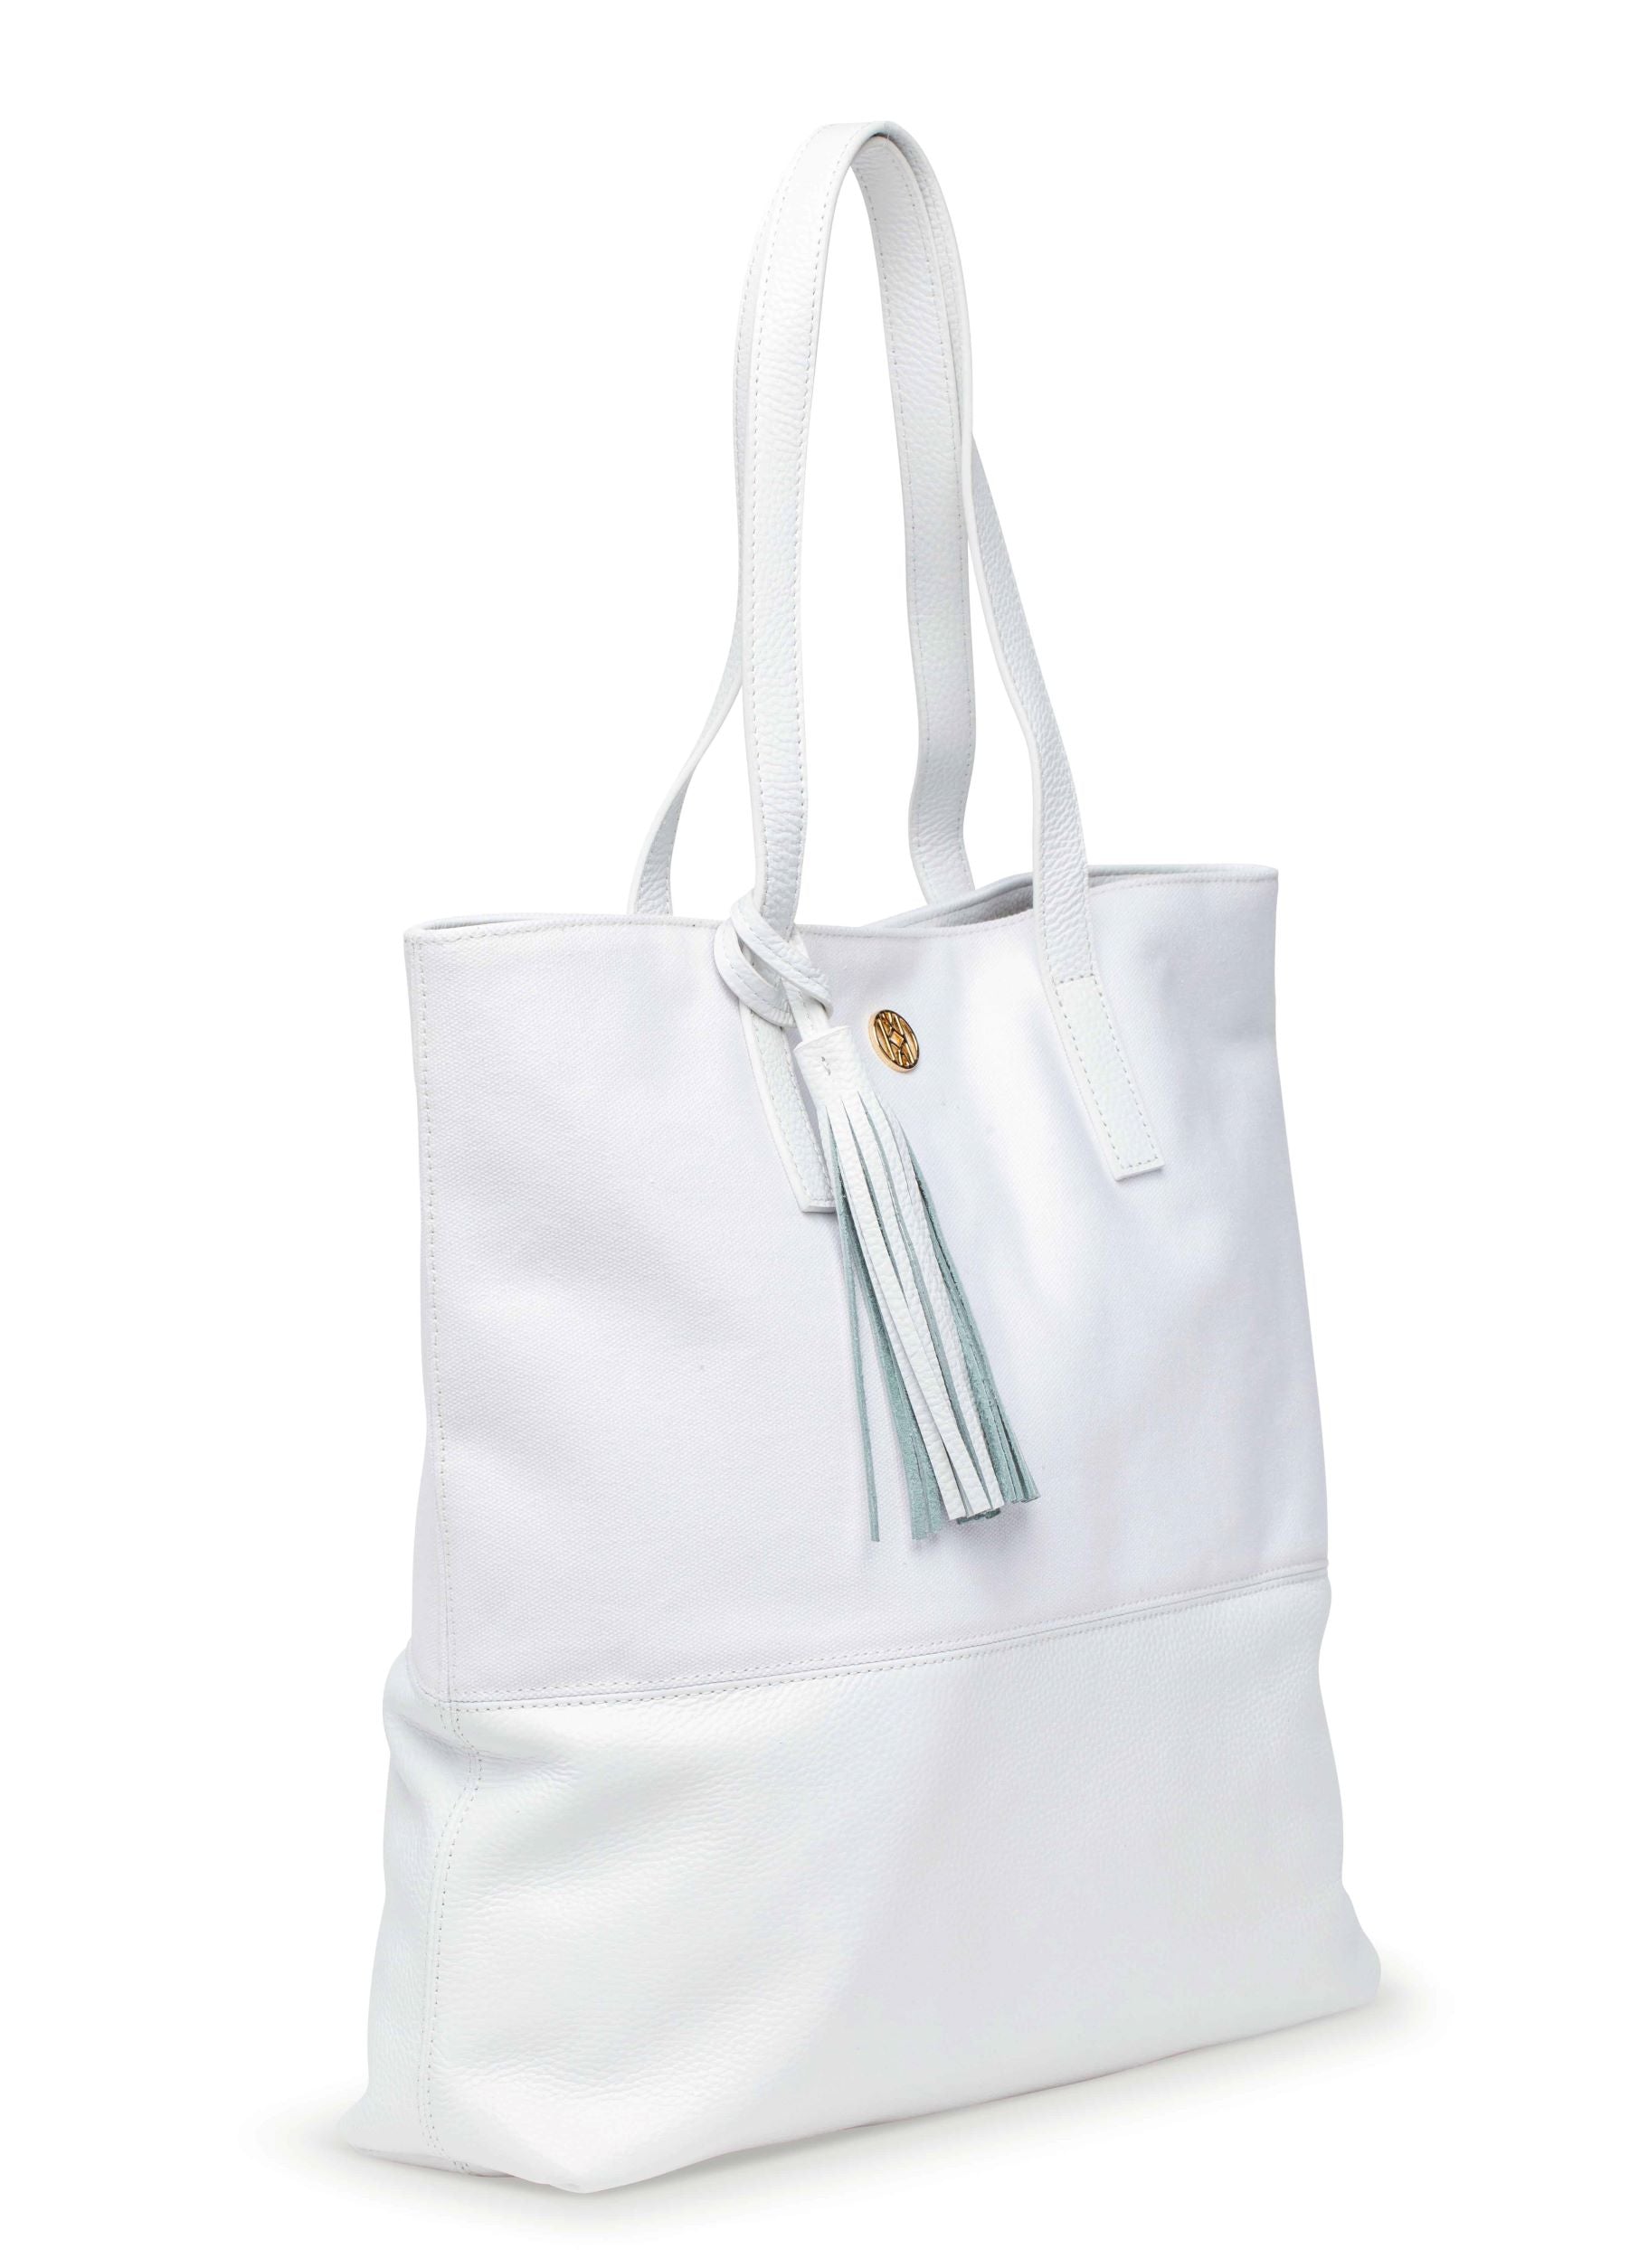 Canvas Shopper White Handbag jeanpierreklifa.com   